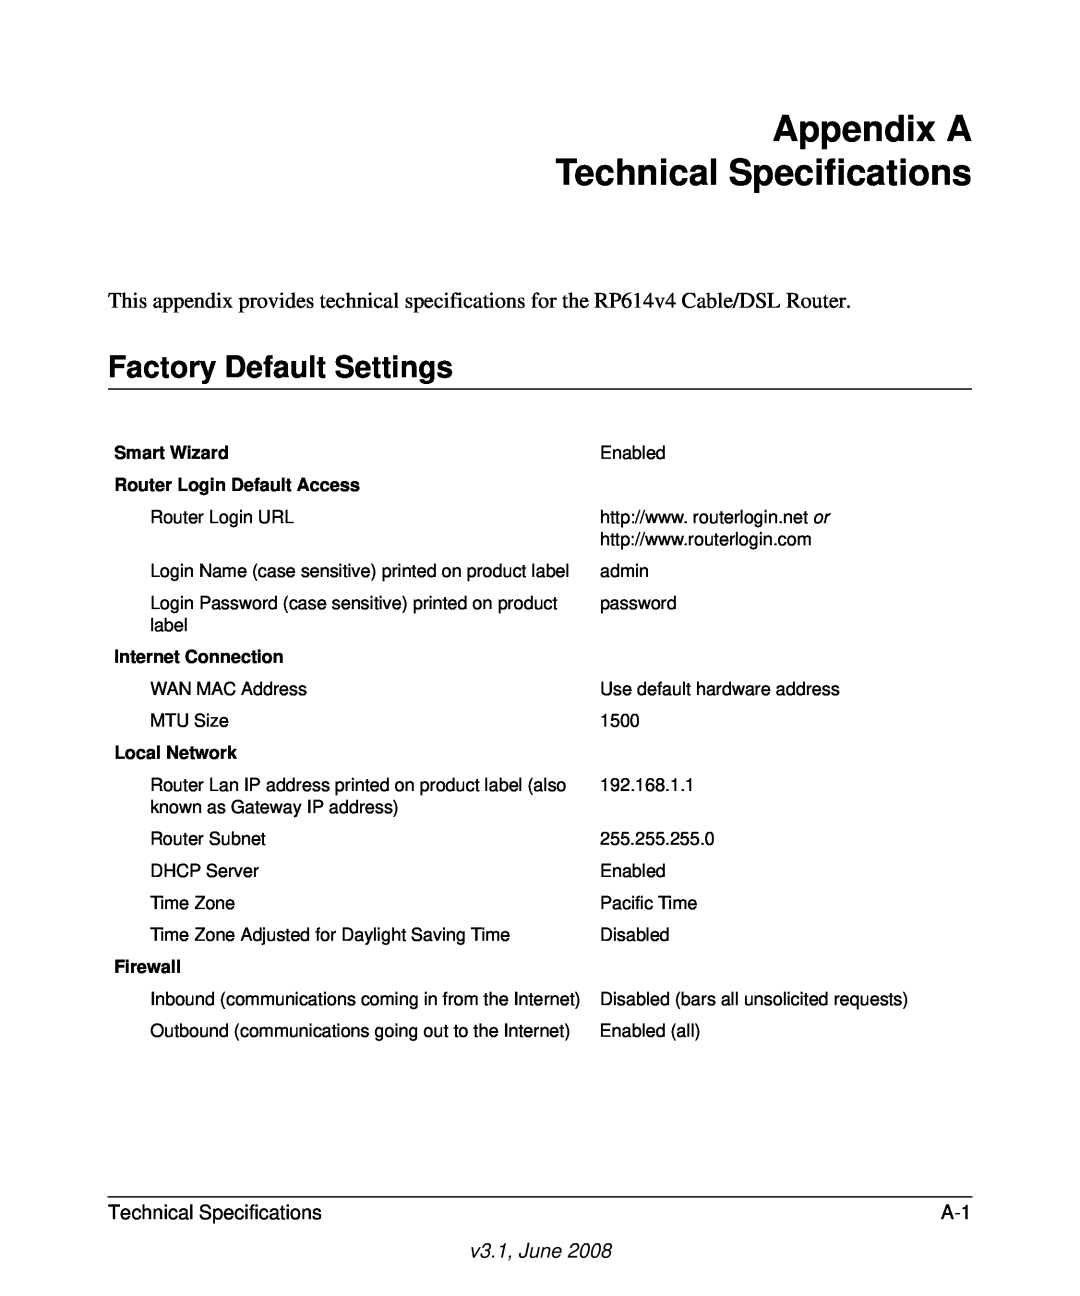 NETGEAR RP614 v4 manual Appendix A Technical Specifications, Factory Default Settings, v3.1, June 